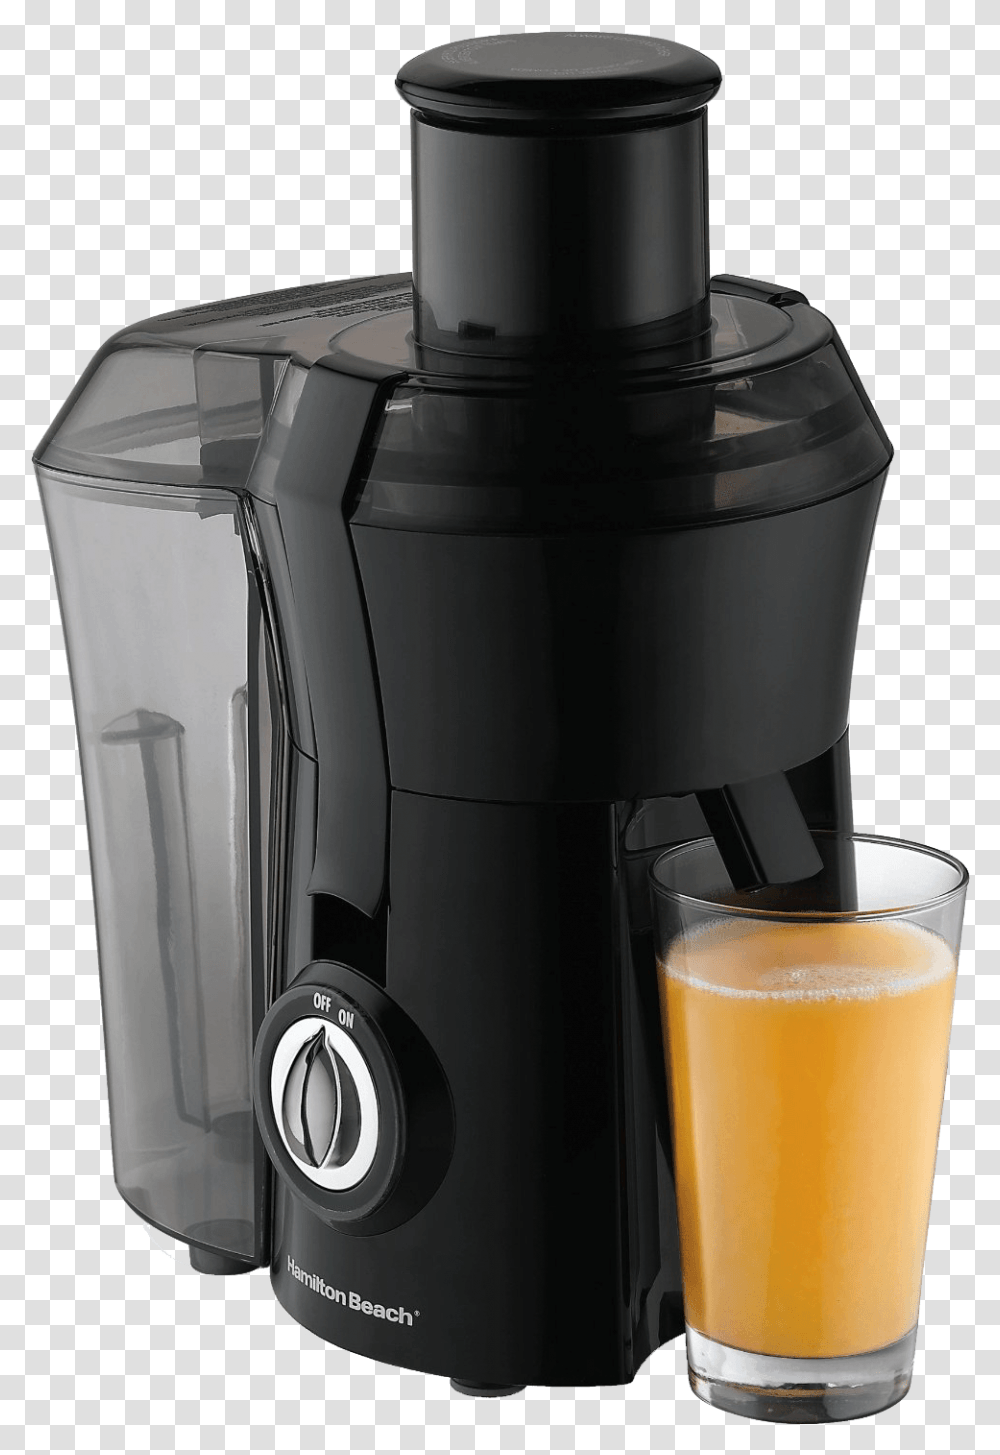 Download Juicer Mixer Juice Juicing Hamilton Orange Beach Hamilton Beach Juicer, Appliance, Shaker, Bottle, Beer Transparent Png